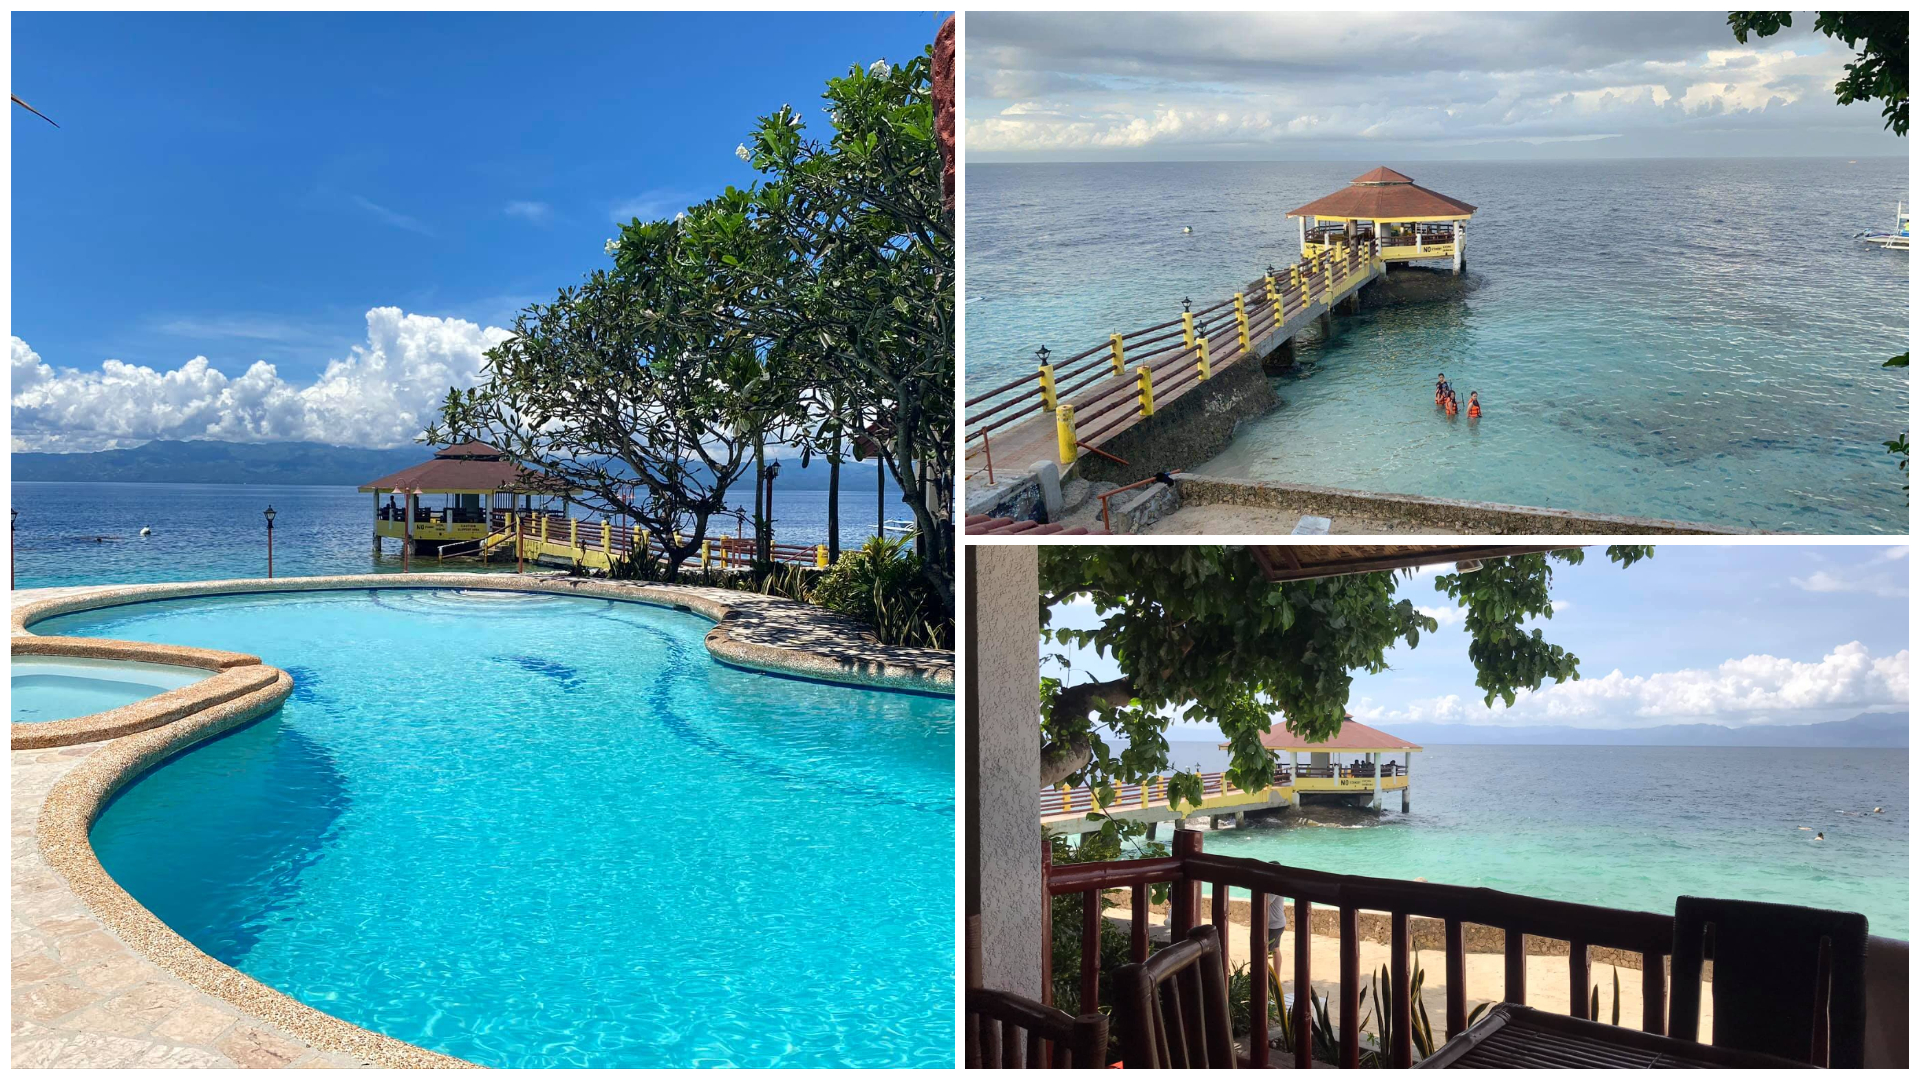 1 Cabana Beach Club Resort Moalboal Cebu